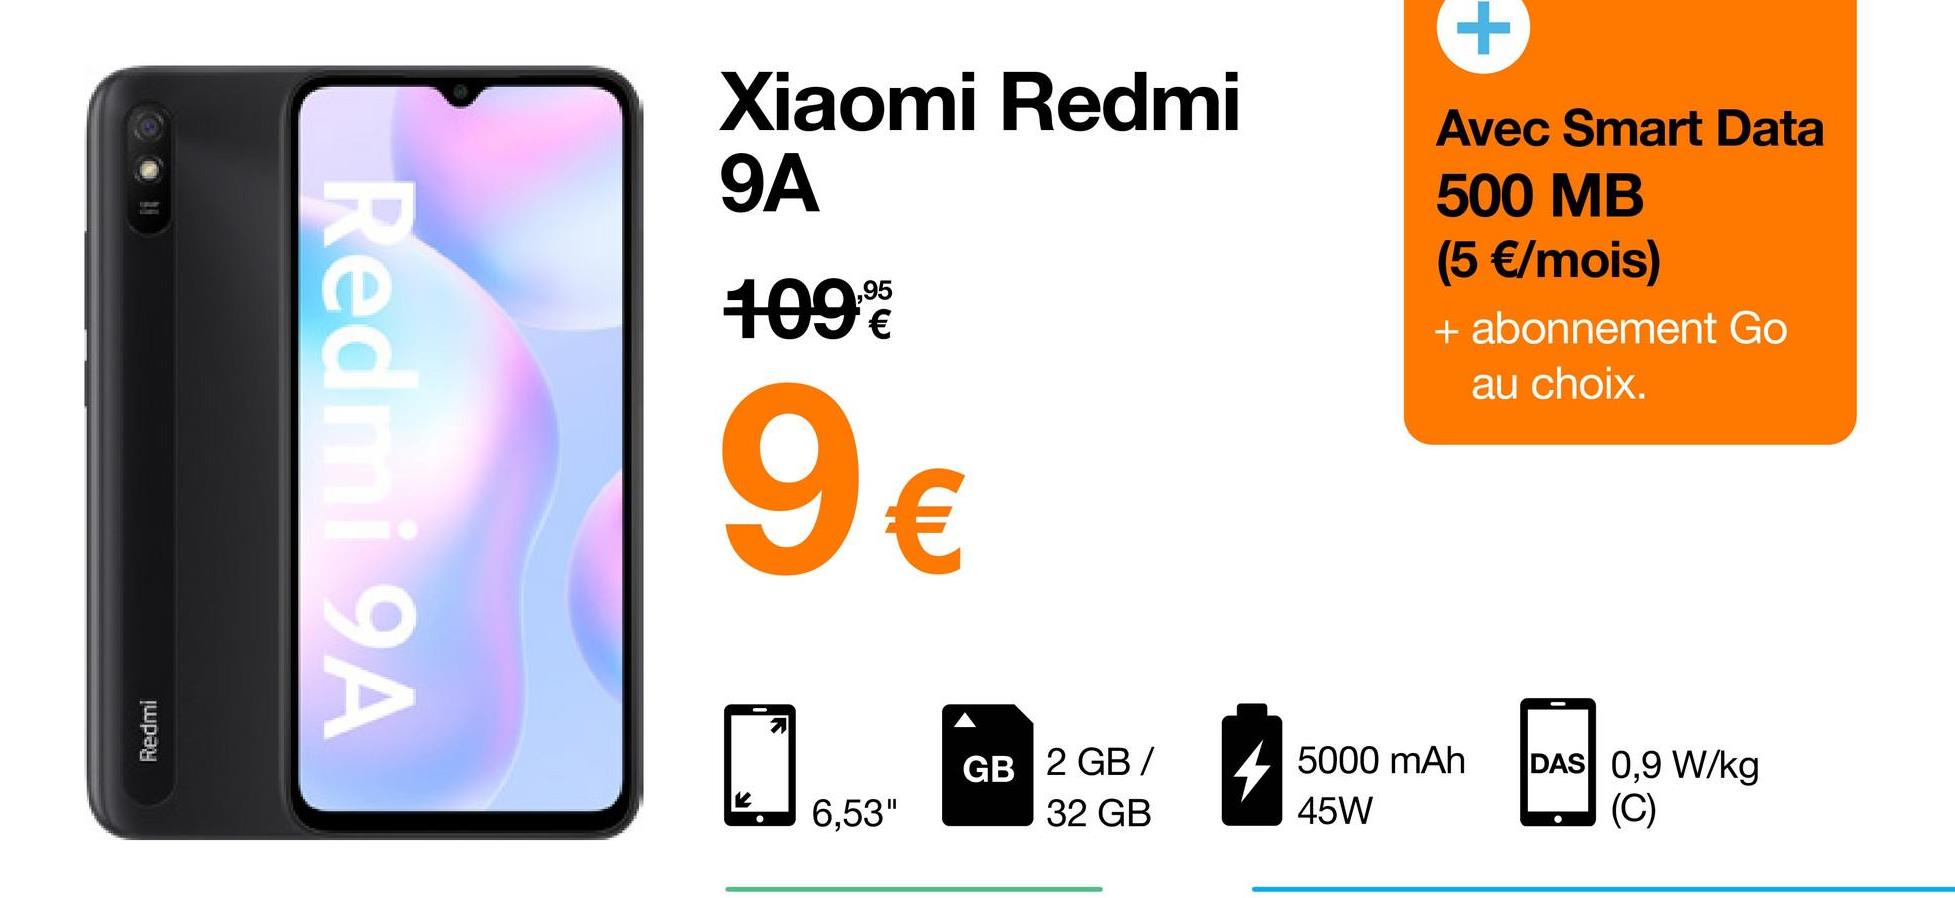 Redmi
Redmi 9A
Xiaomi Redmi
9A
109⁰
9€
K
6,53"
GB 2 GB/
32 GB
Avec Smart Data
500 MB
(5 €/mois)
+ abonnement Go
au choix.
5000 mAh
45W
DAS 0,9 W/kg
(C)